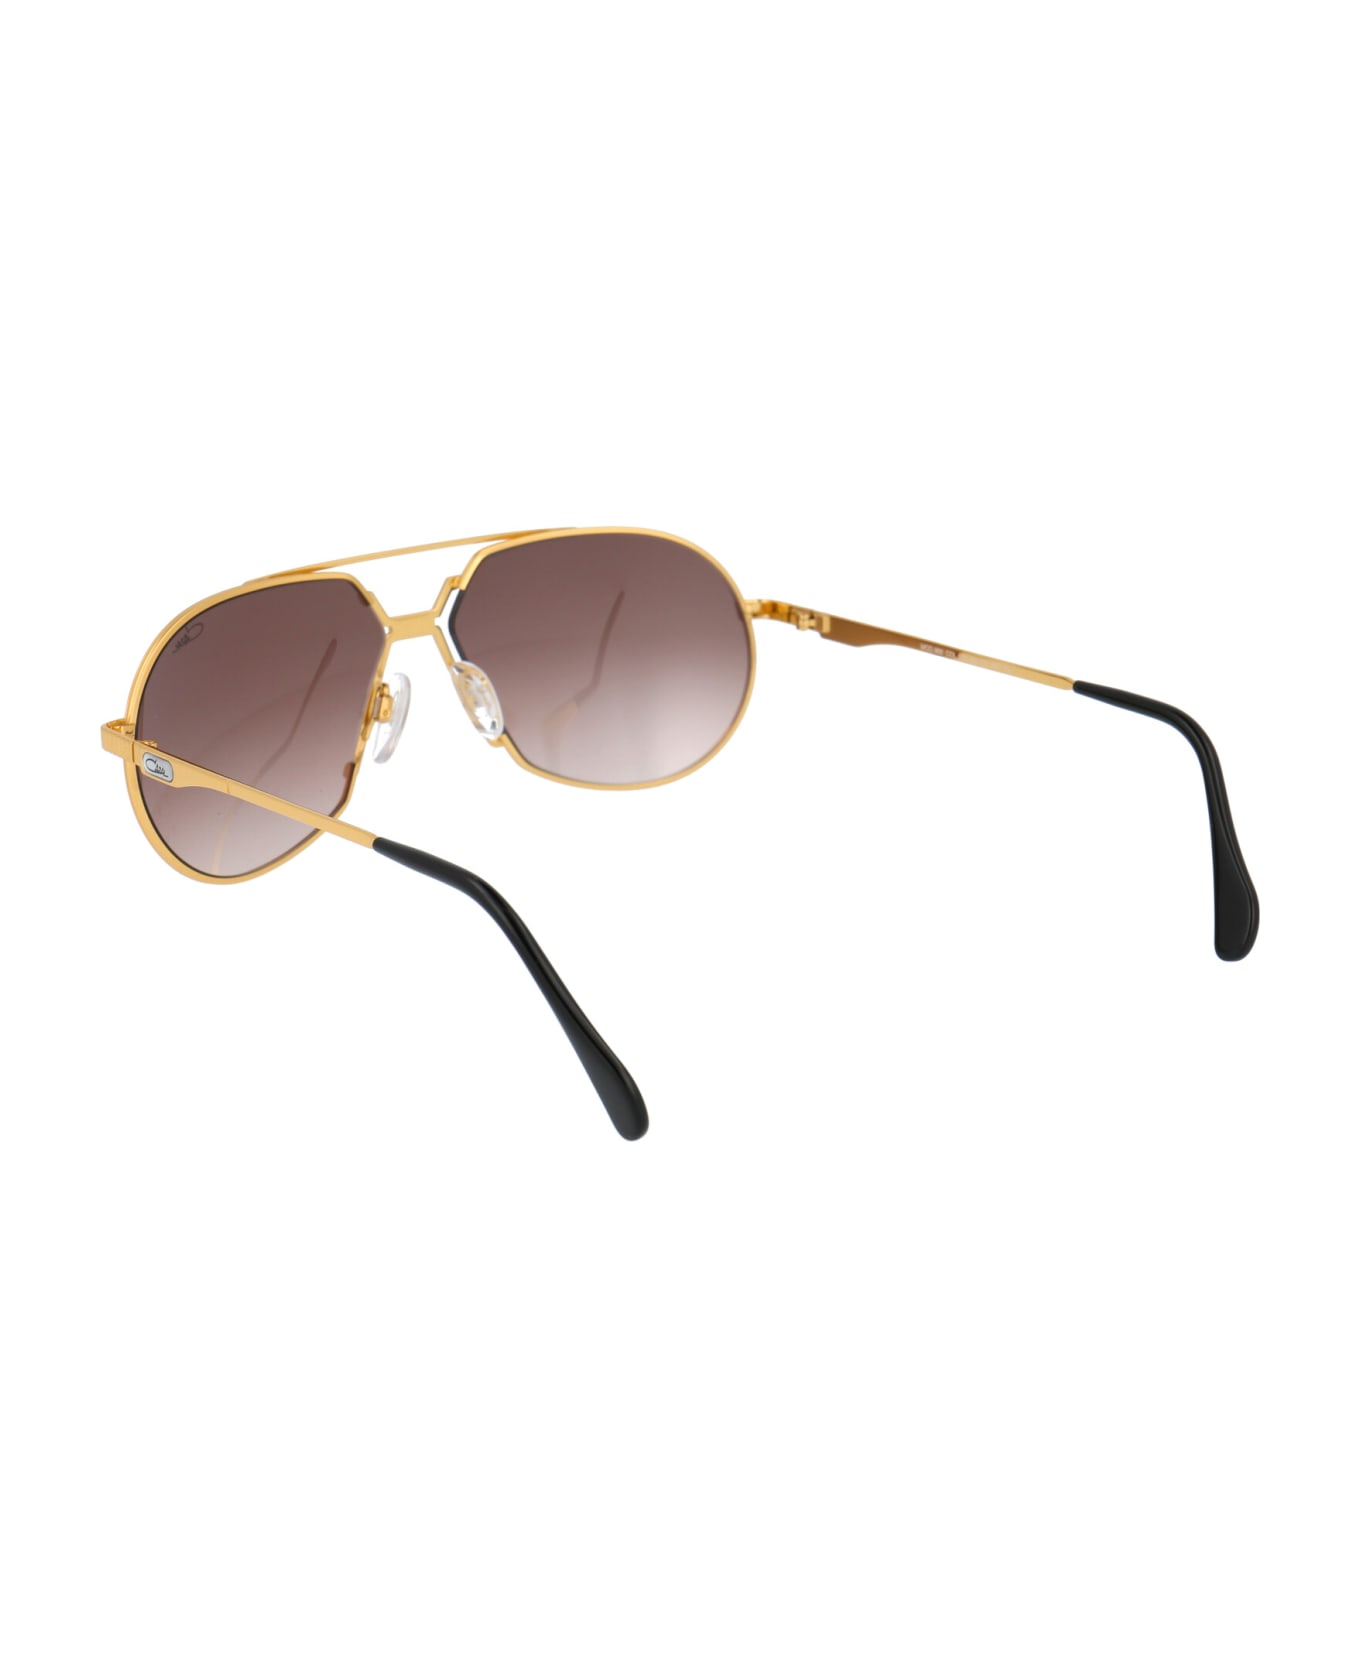 Cazal Mod. 968 Sunglasses - 003 GOLD